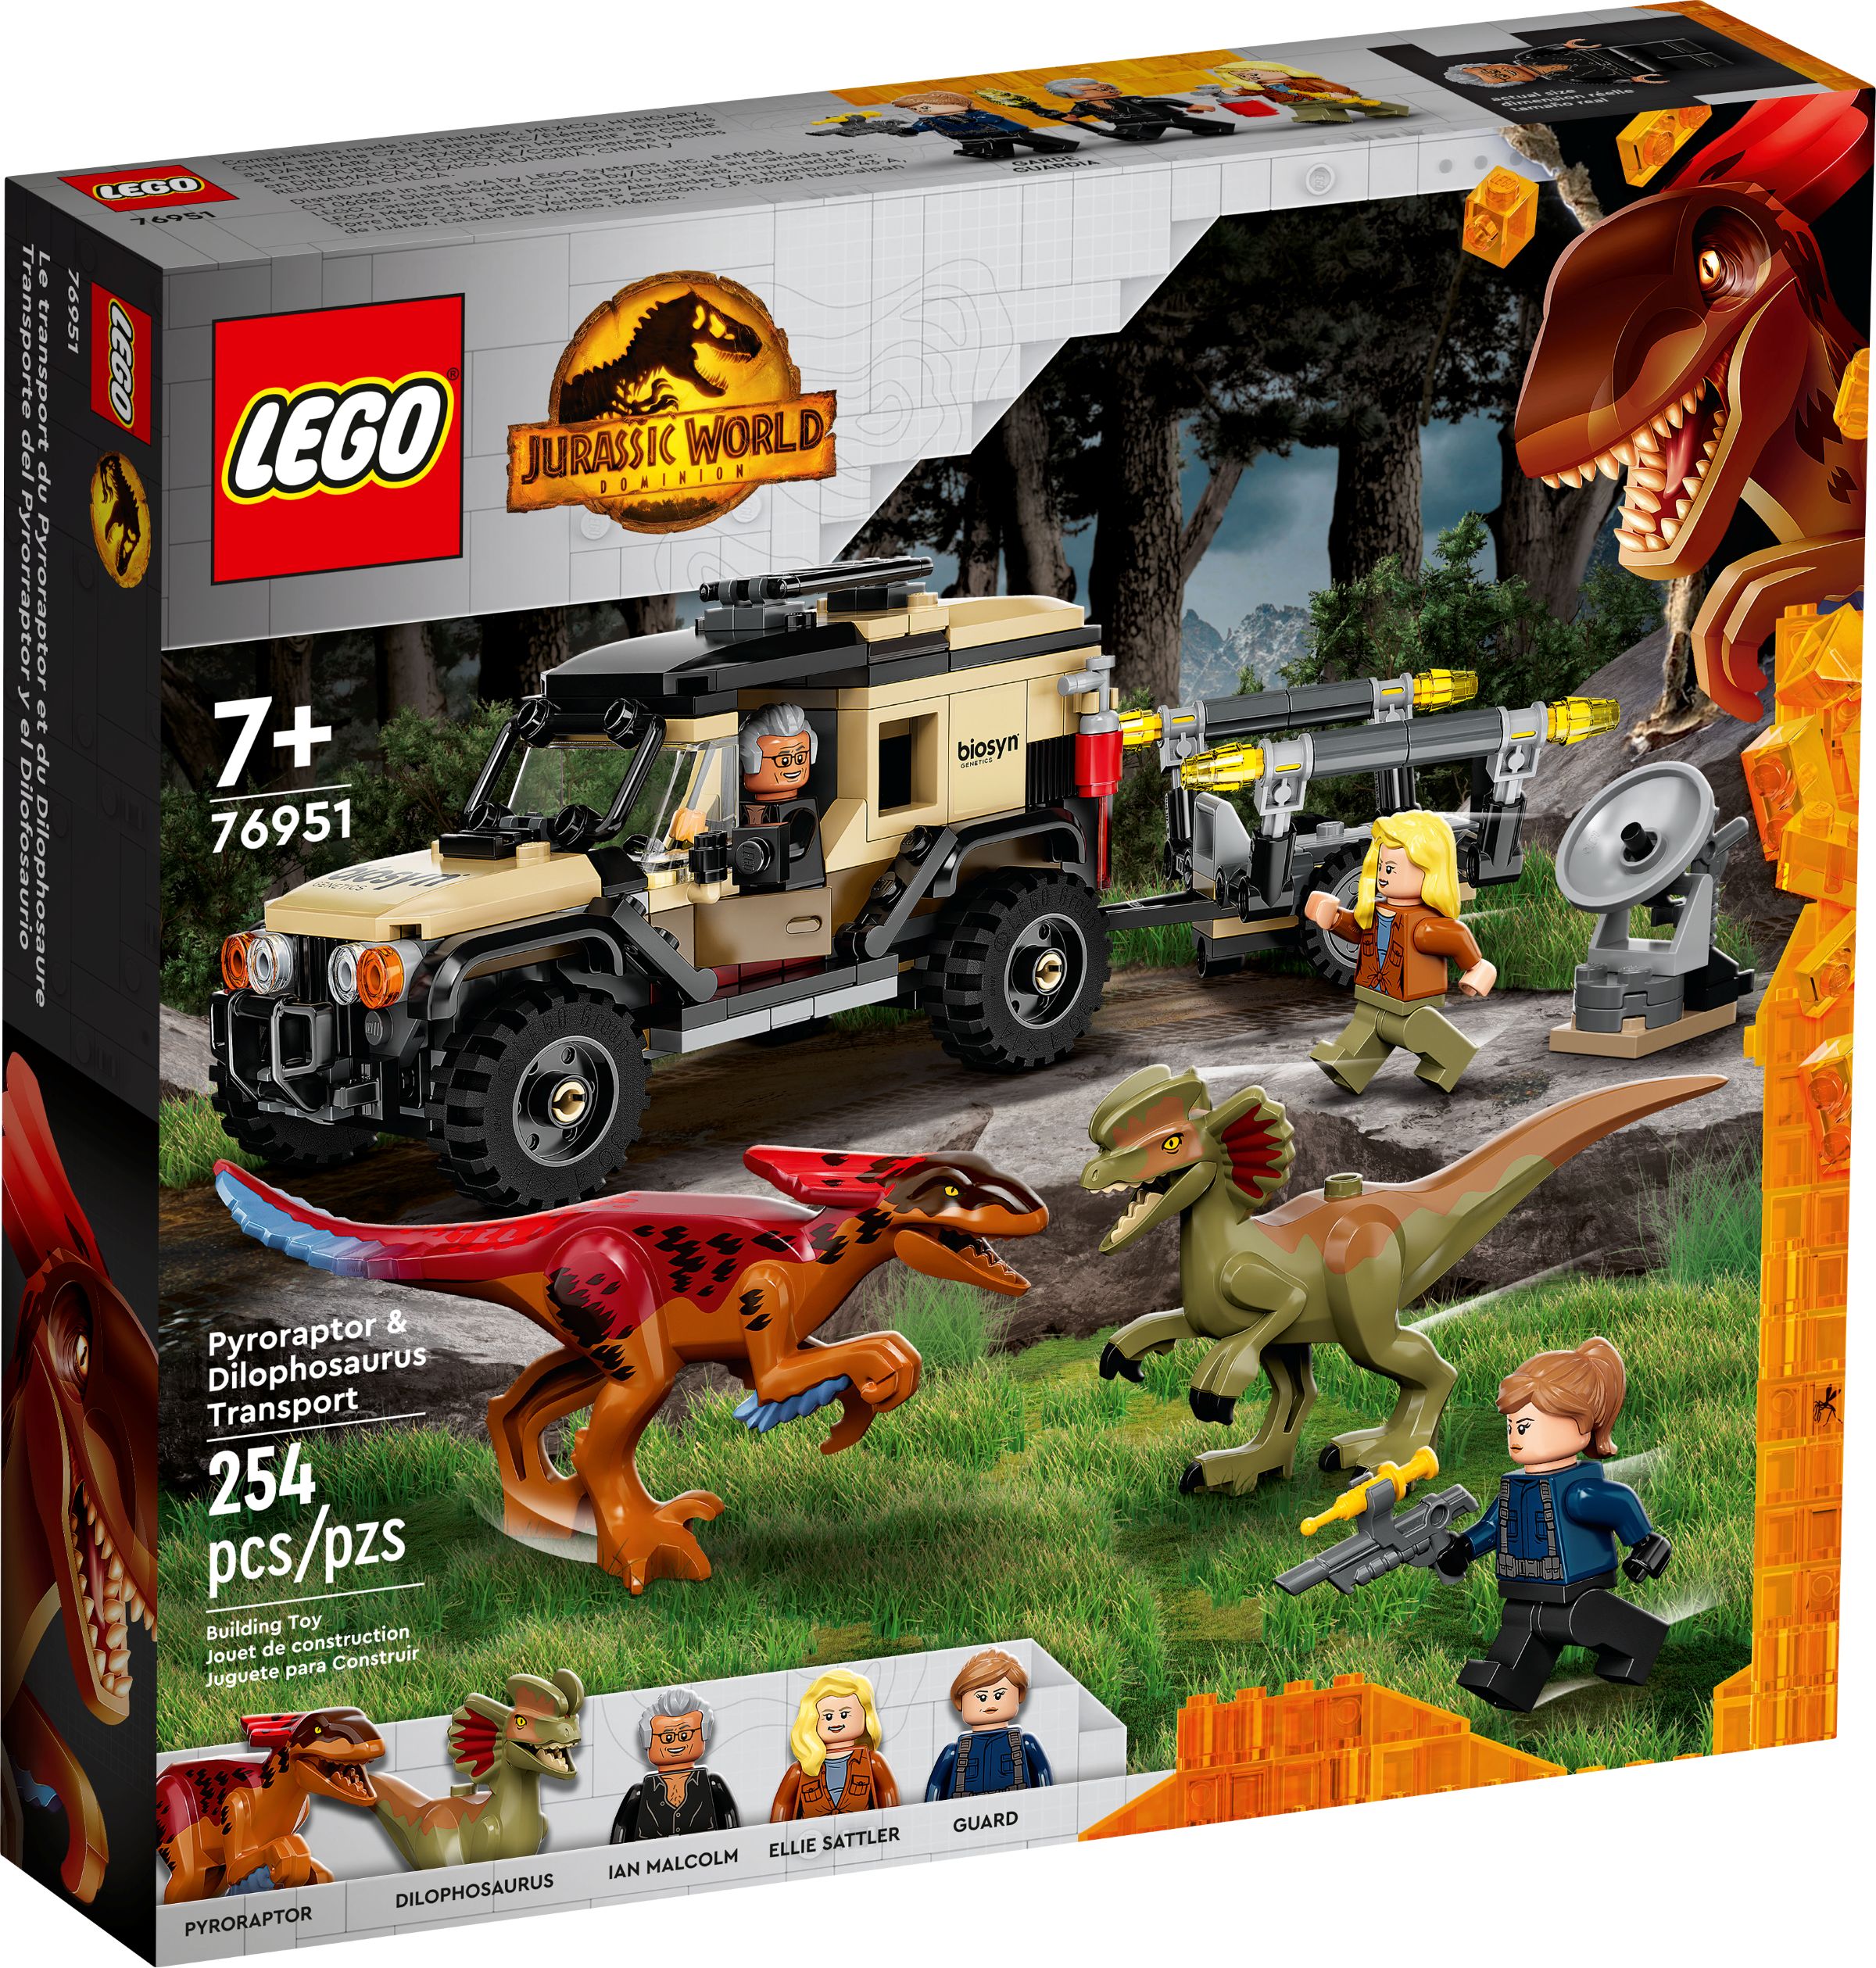 LEGO Jurassic World 76951 Pyroraptor & Dilophosaurus Transport LEGO_76951_alt1.jpg